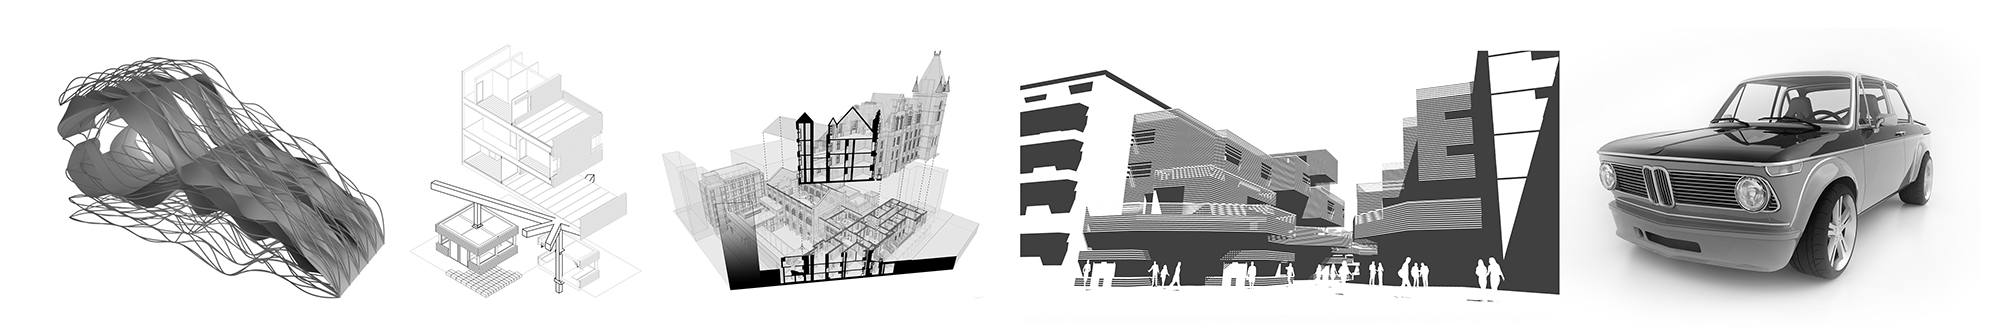 3d architectural visualisation